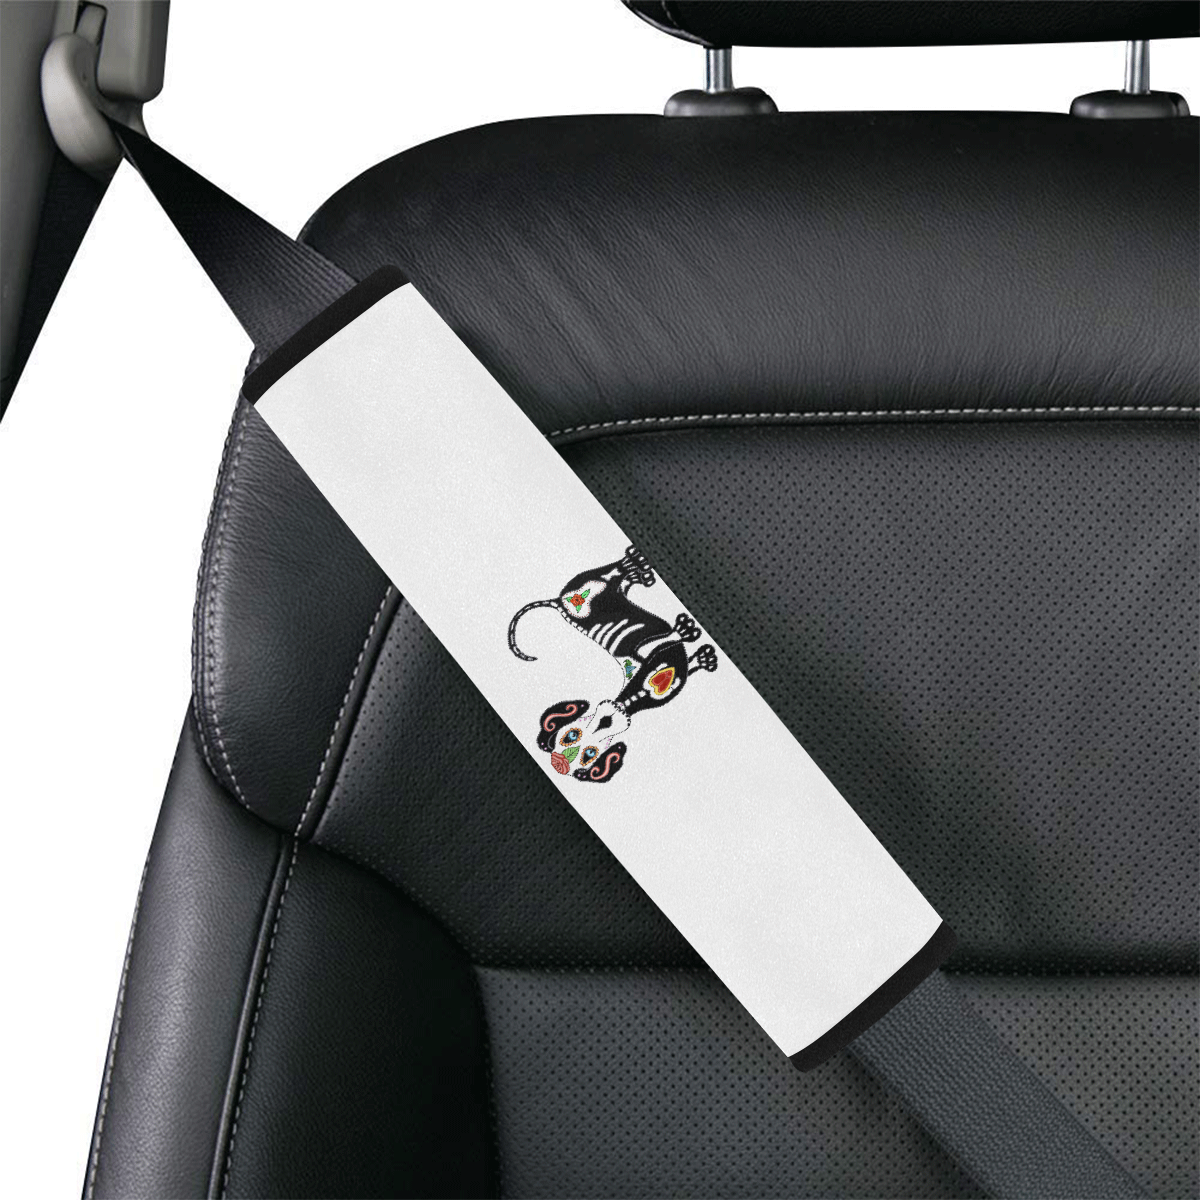 Dachshund Sugar Skull White Car Seat Belt Cover 7''x12.6''